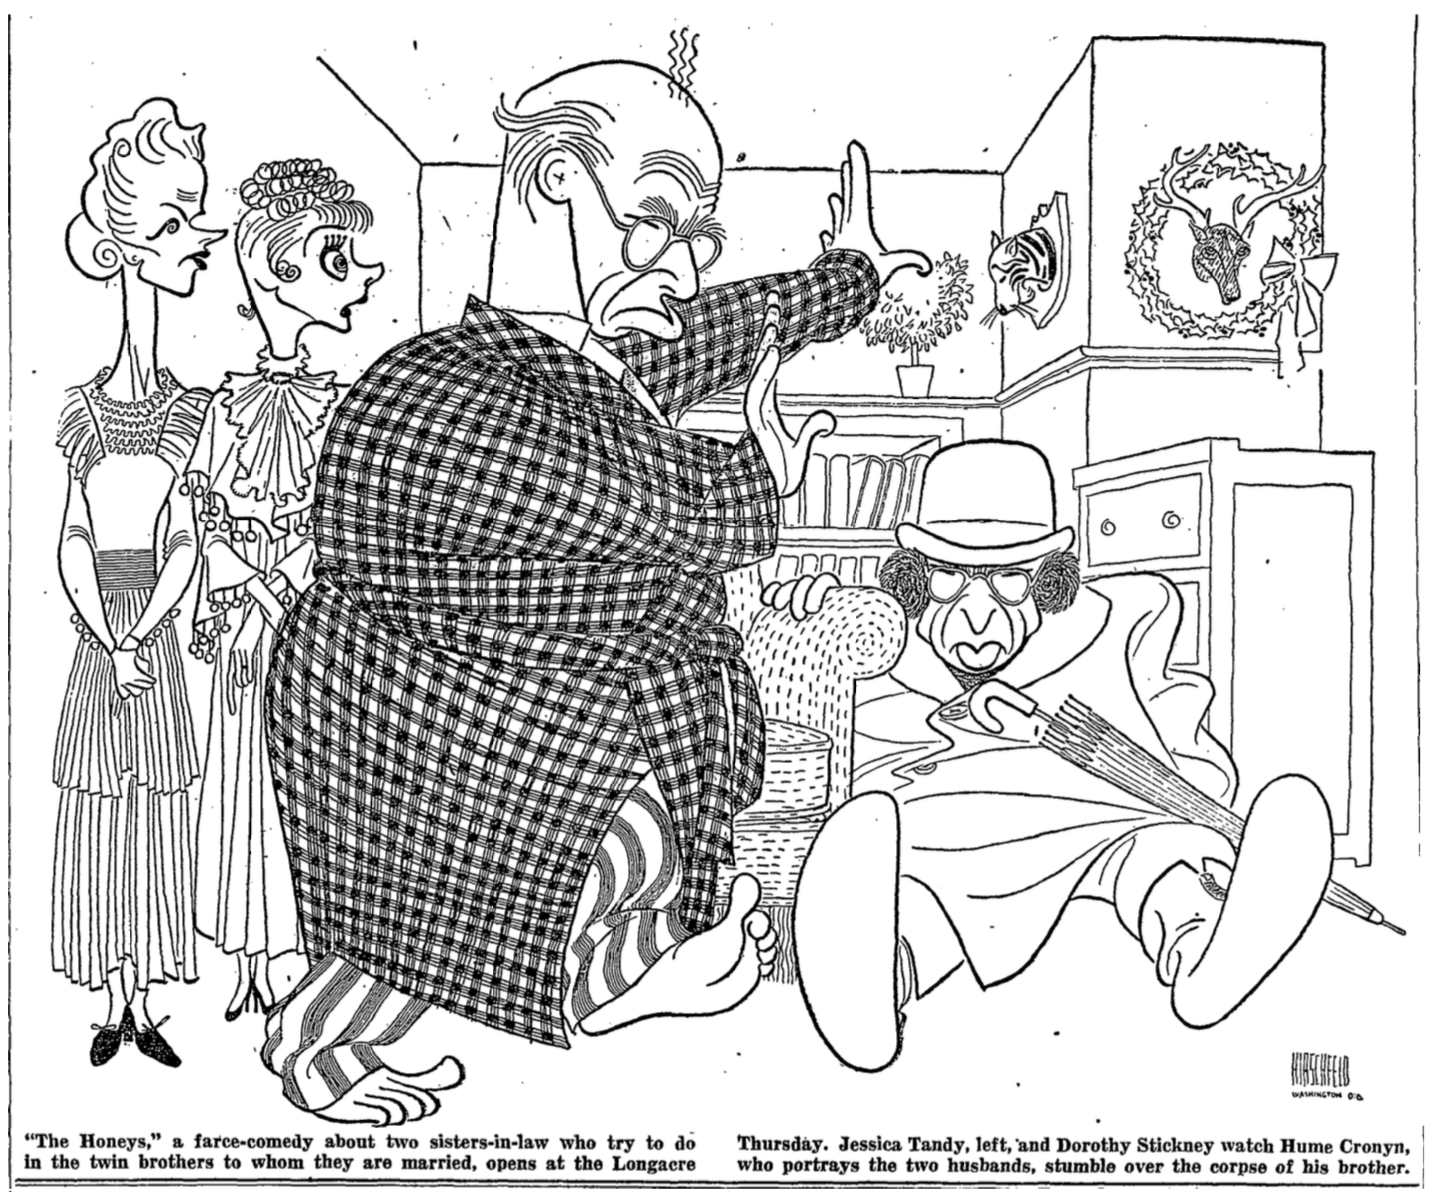 Honey's caricature by Al Hirschfeld